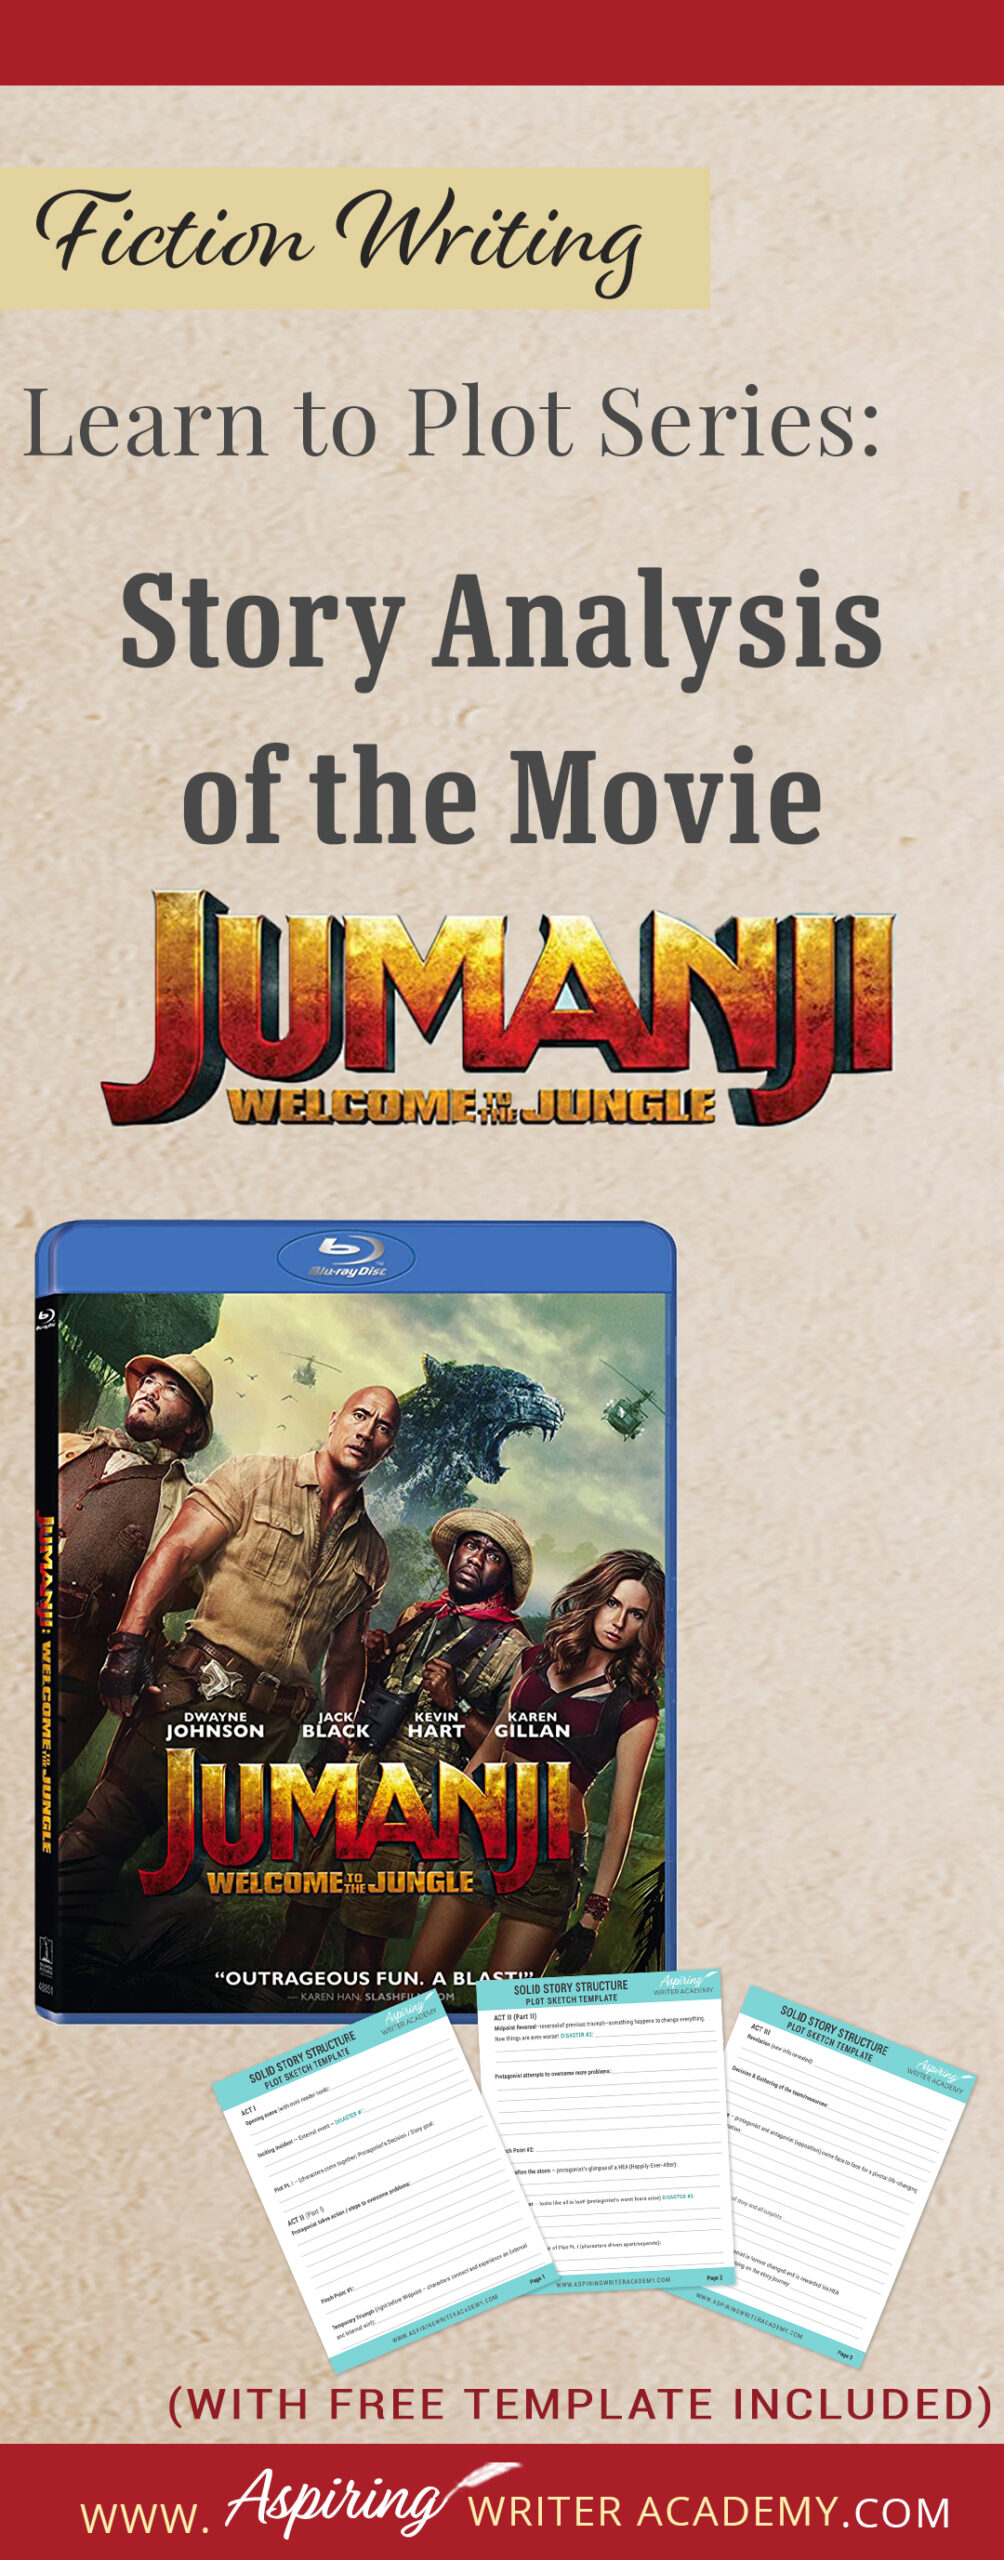 jumanji film review essay